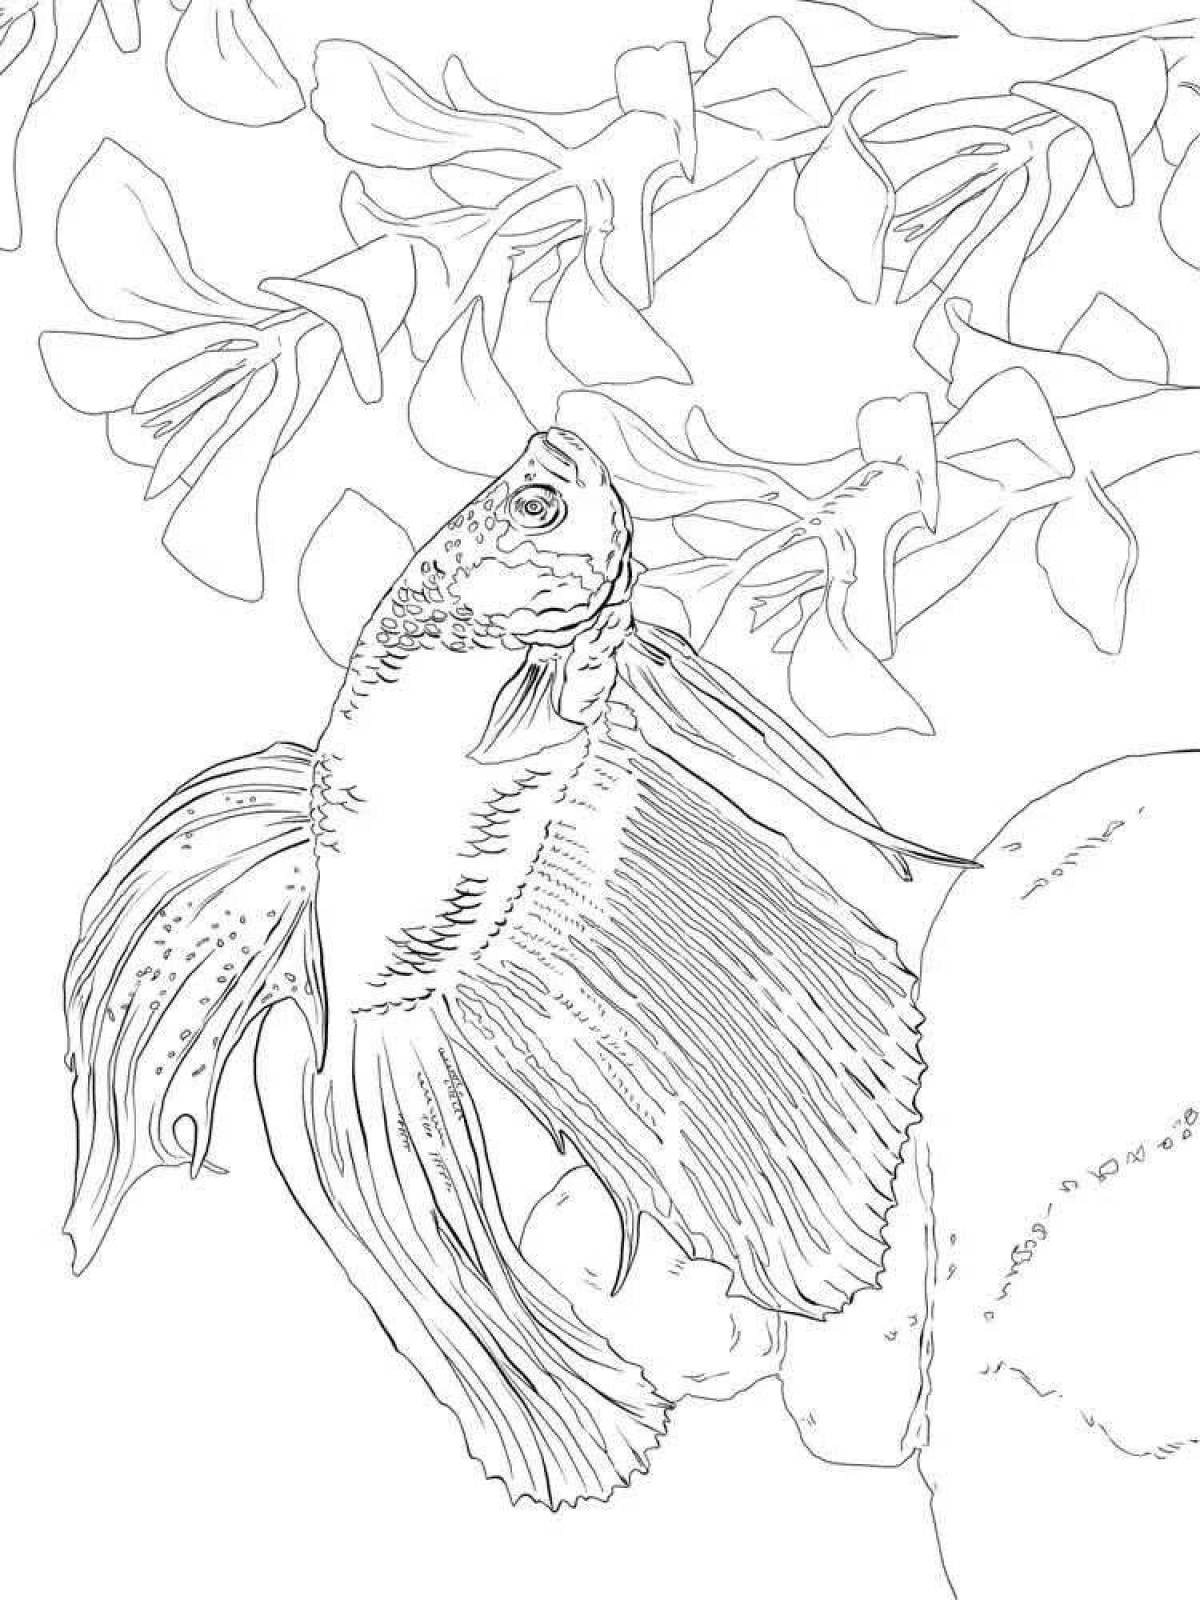 Mystical cock-fish coloring book